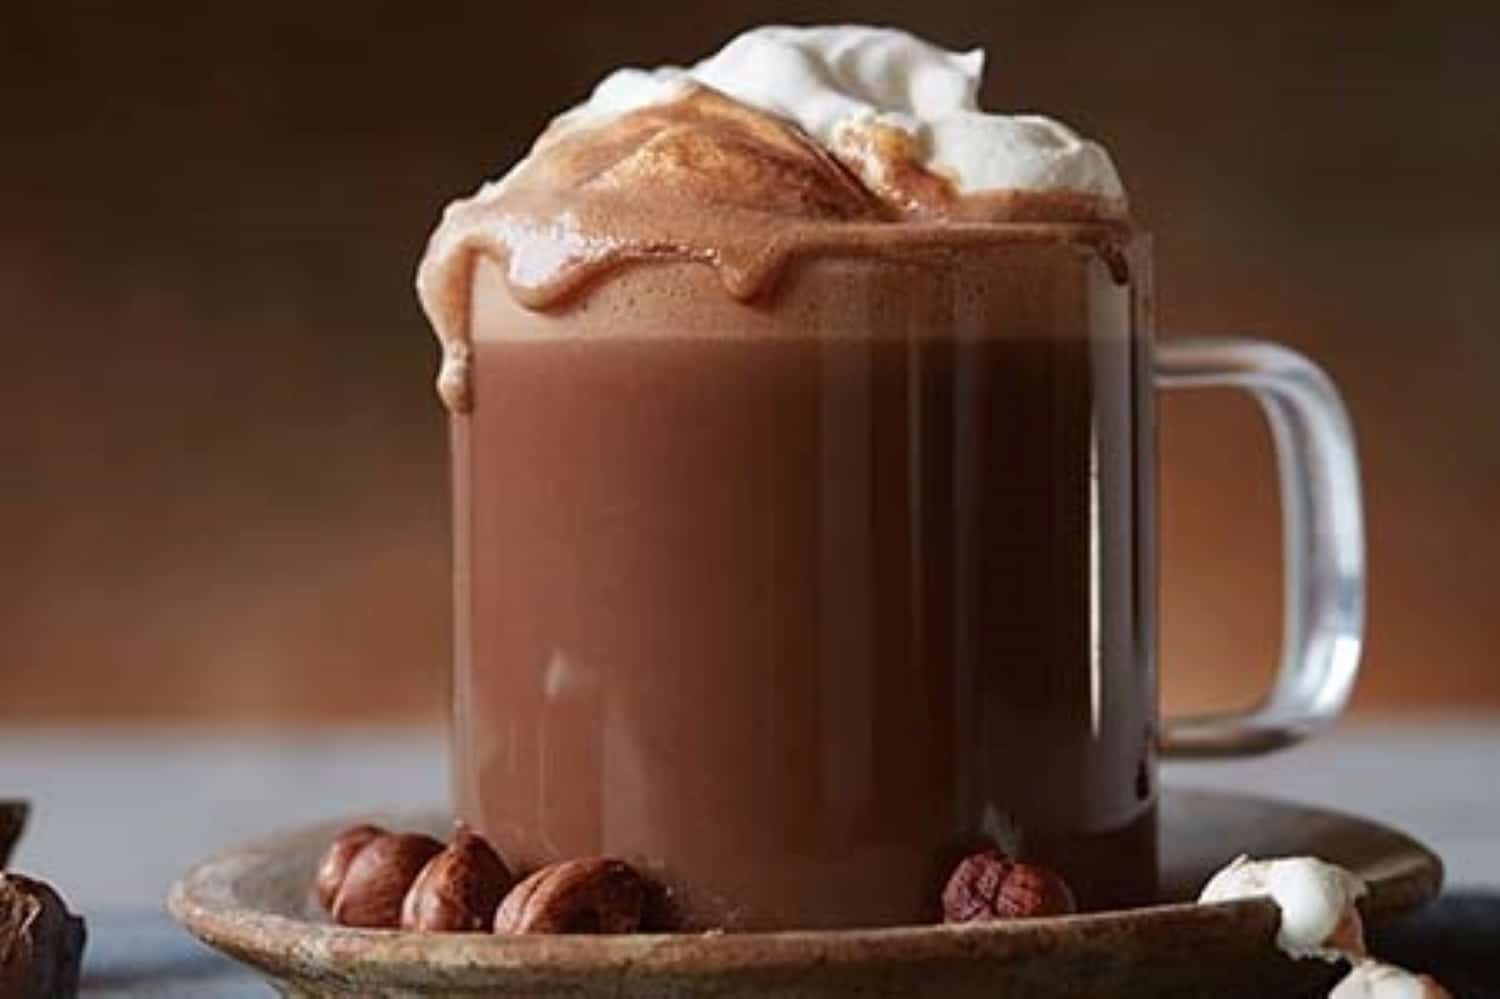 Get the Hazelnut Hot Chocolate recipe